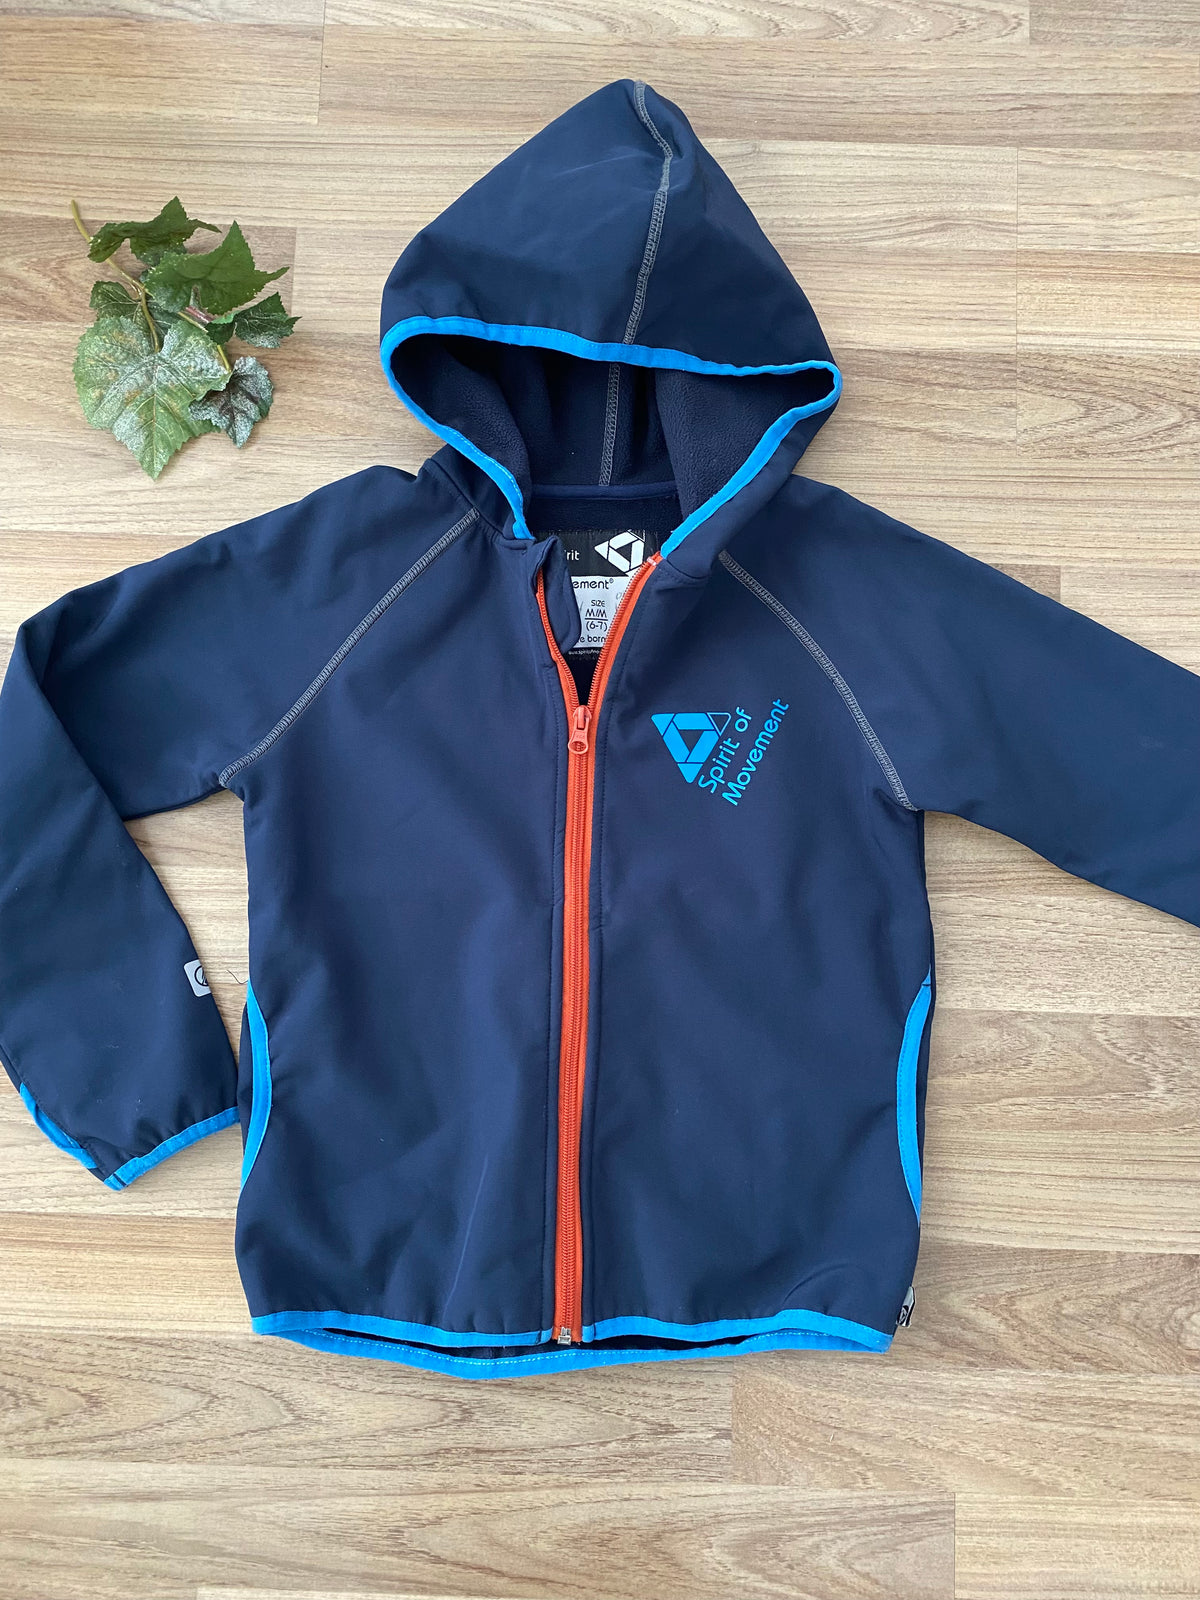 Full Zip Hooded Jacket (Boys size 6-7)